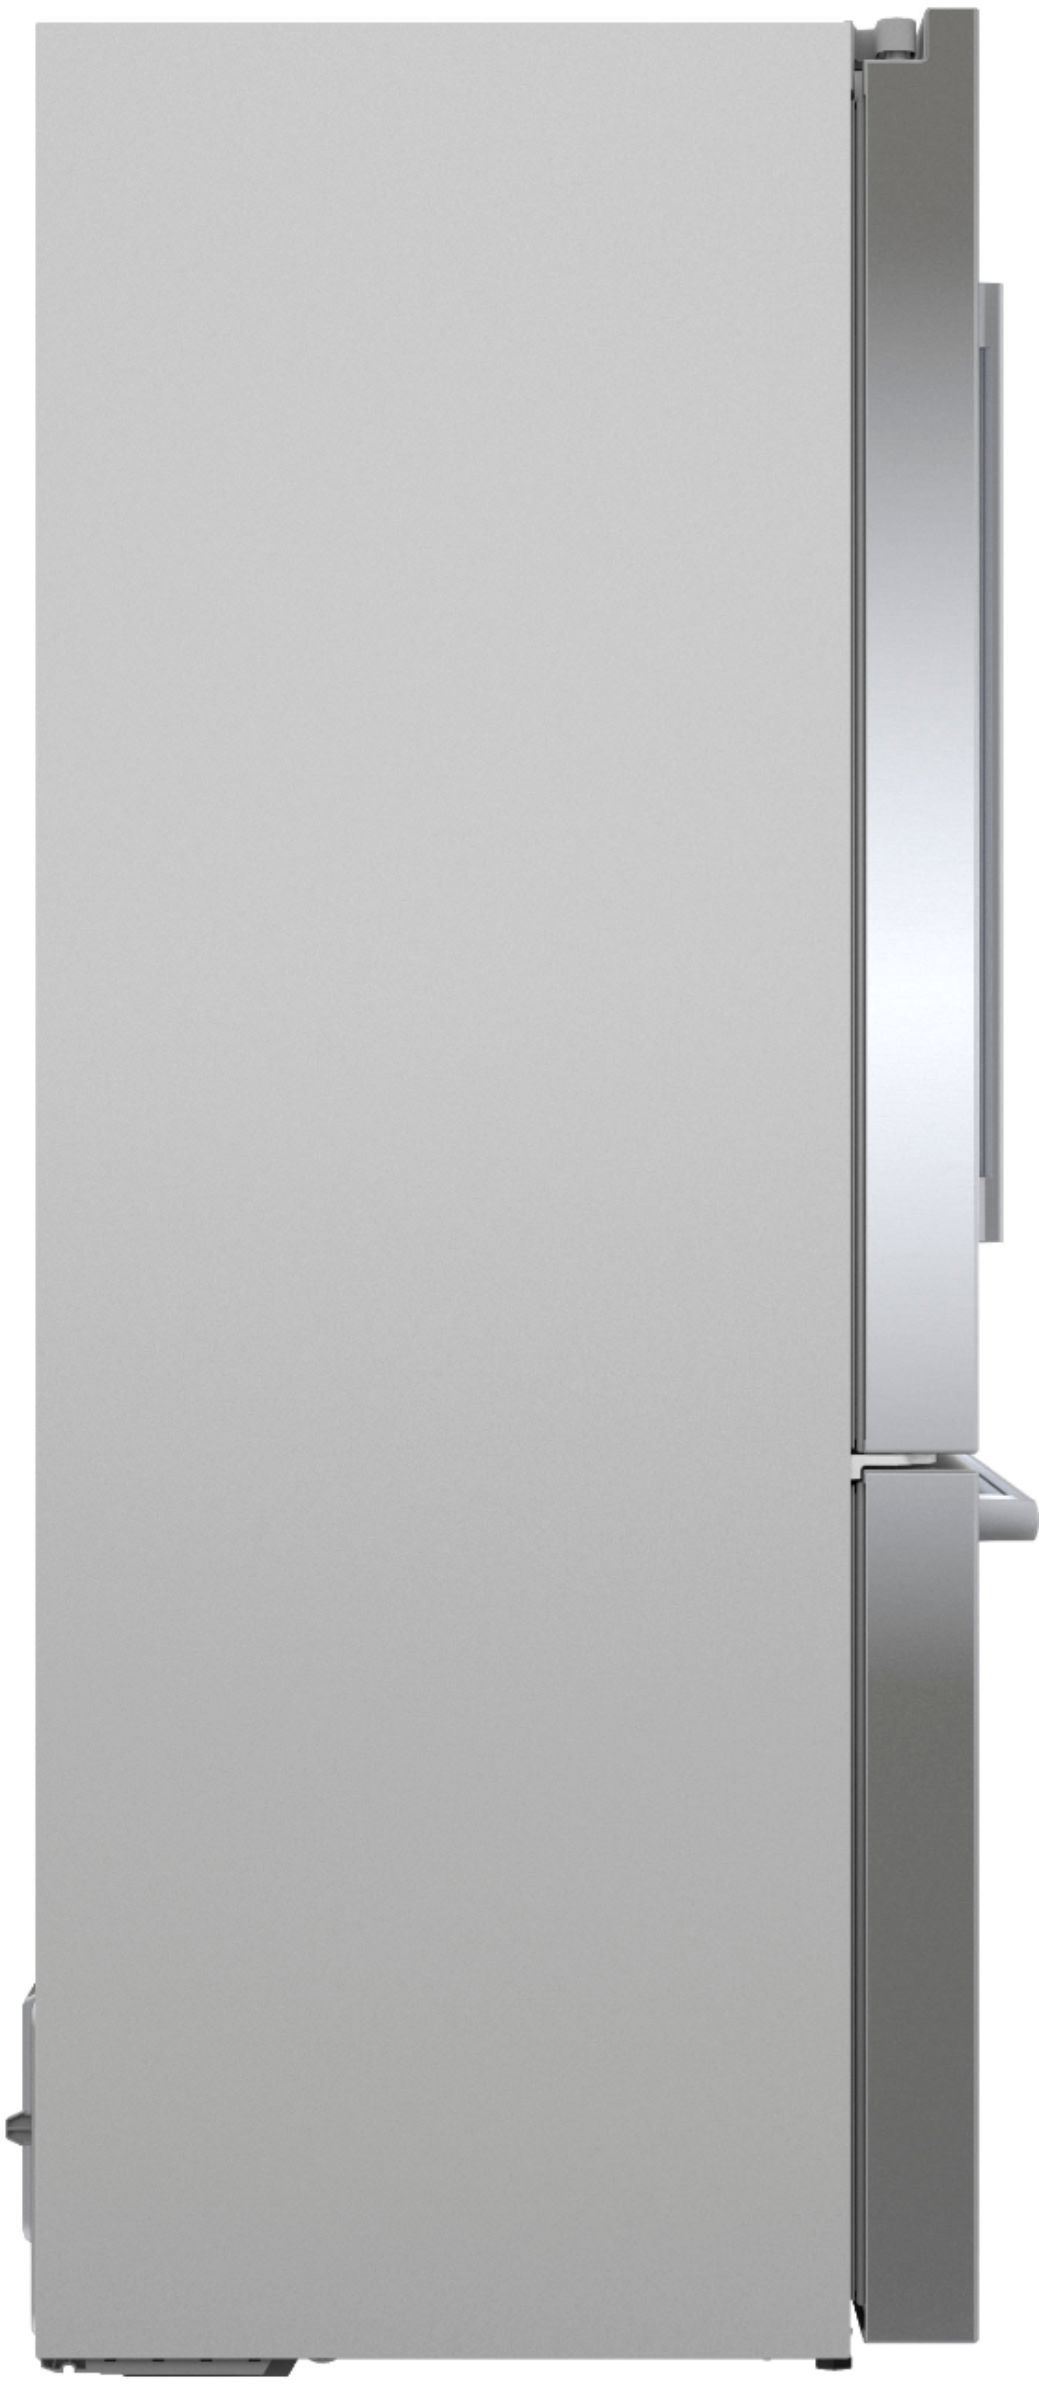 Left View: Samsung - 23 cu. ft. Smart Counter Depth 4-Door Flex Refrigerator with Family Hub & Beverage Center - Black stainless steel